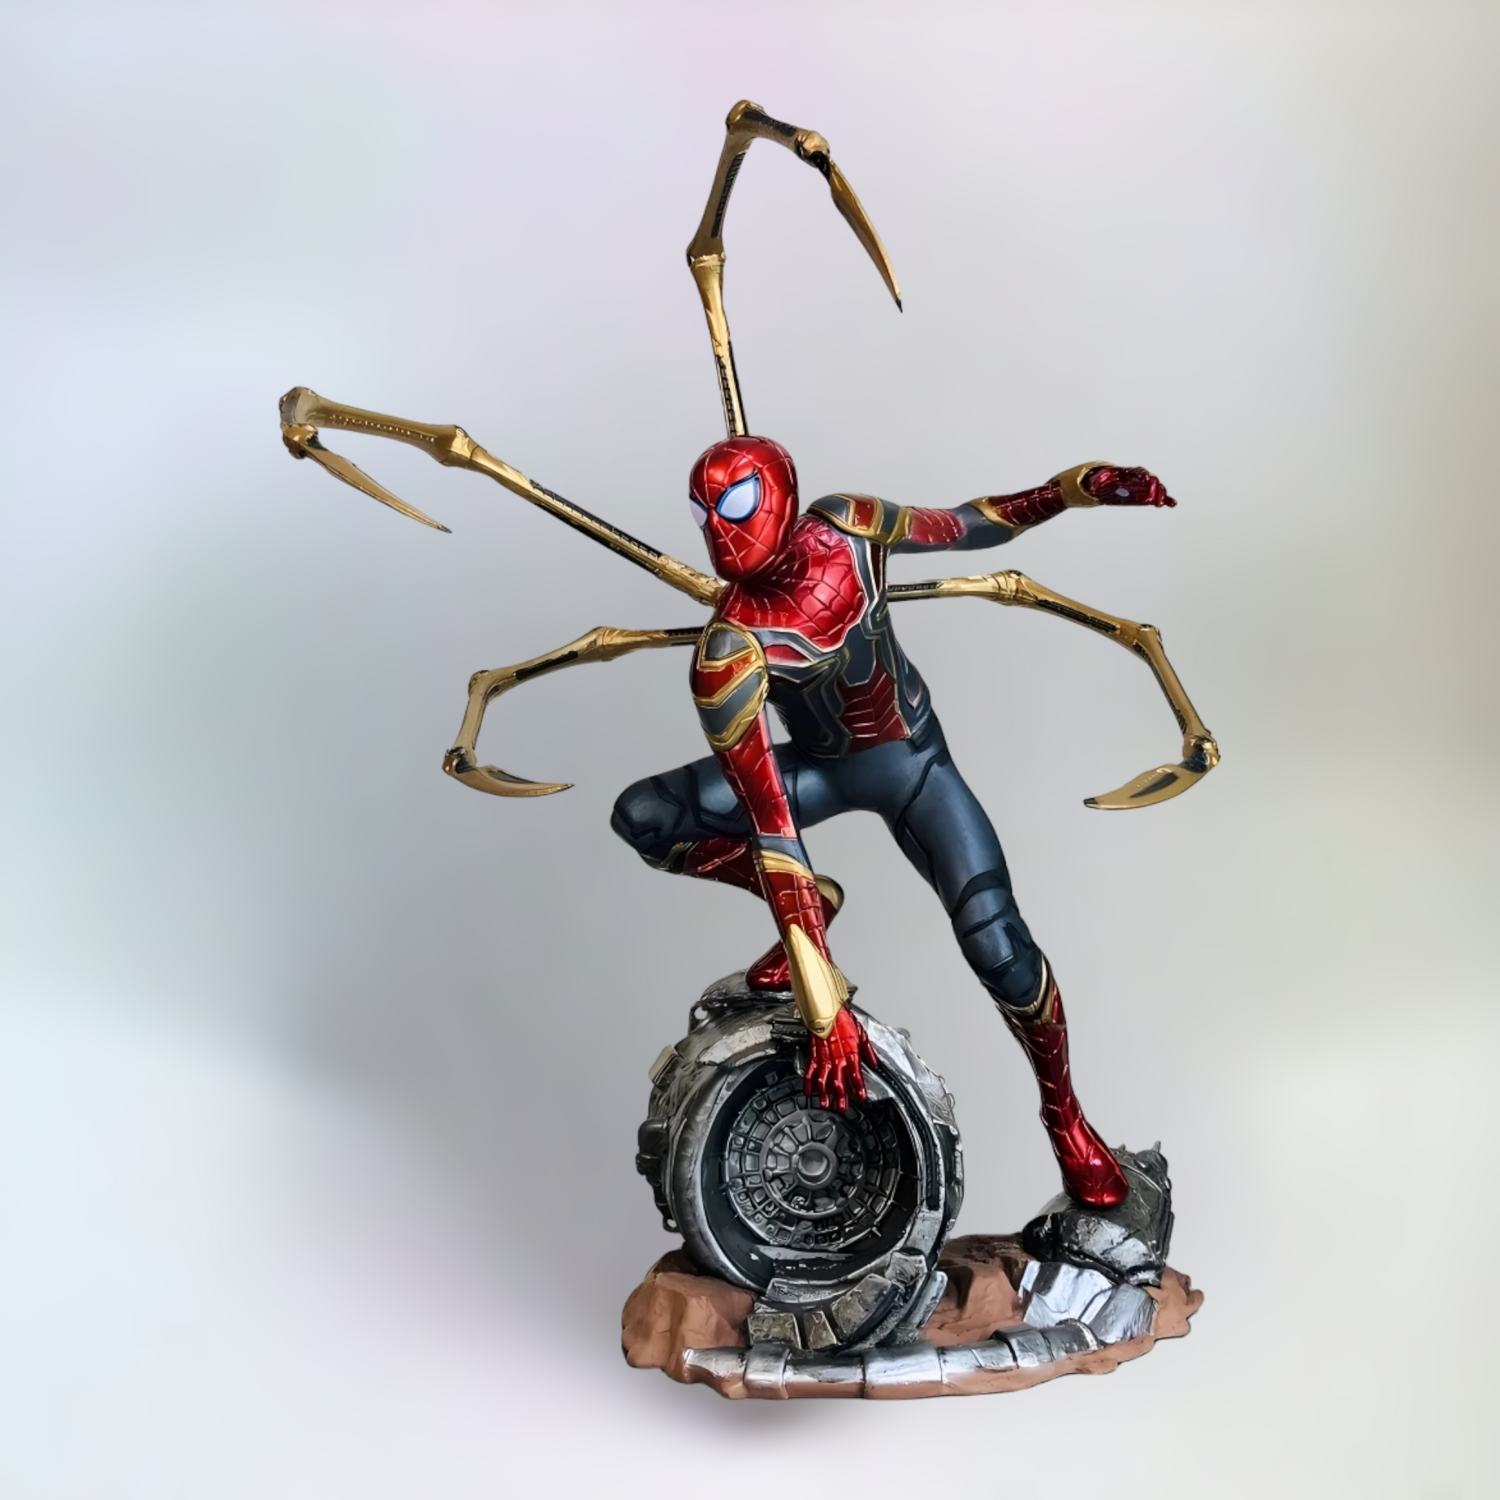 Spiderman Figure Avengers Marvel Infinity War Metallic 24cm Collectible Figurine - Image of Spiderman figurine with plain white background